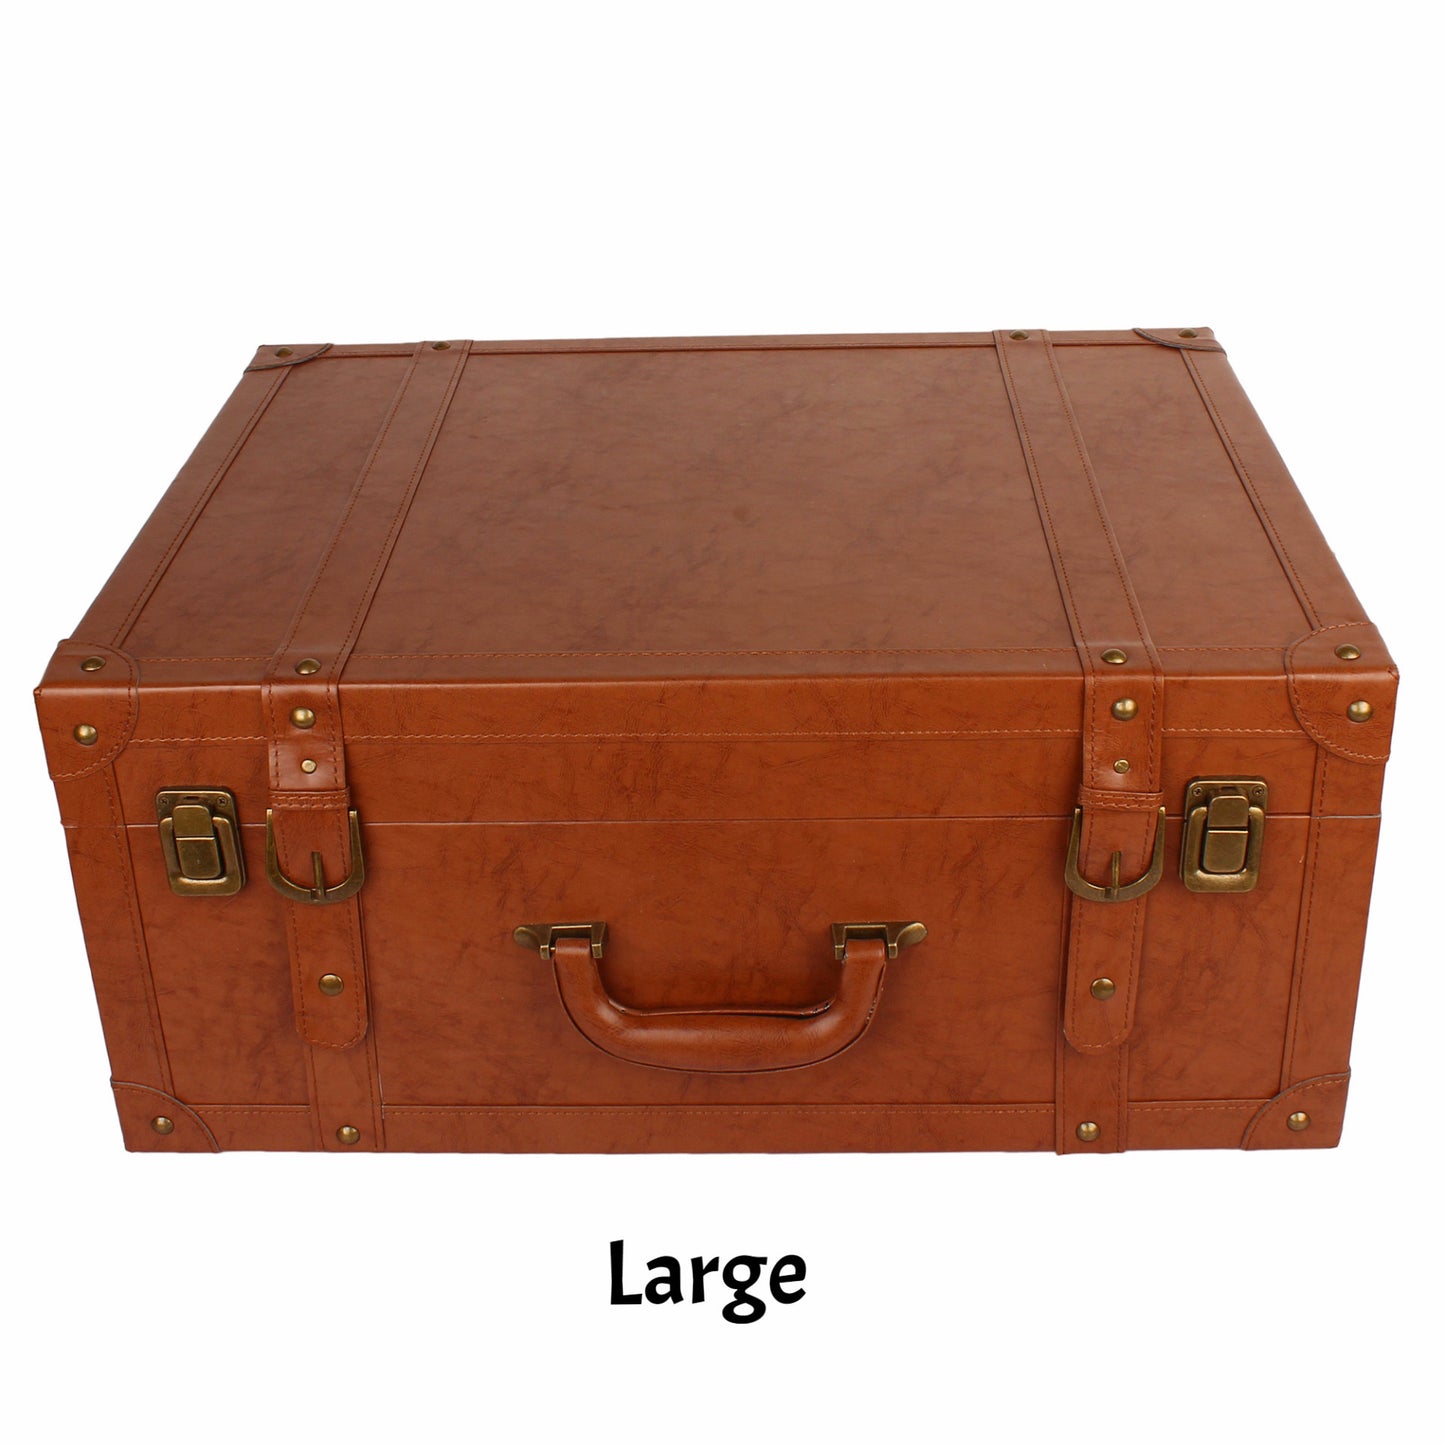 Vintage storage box / Trunks